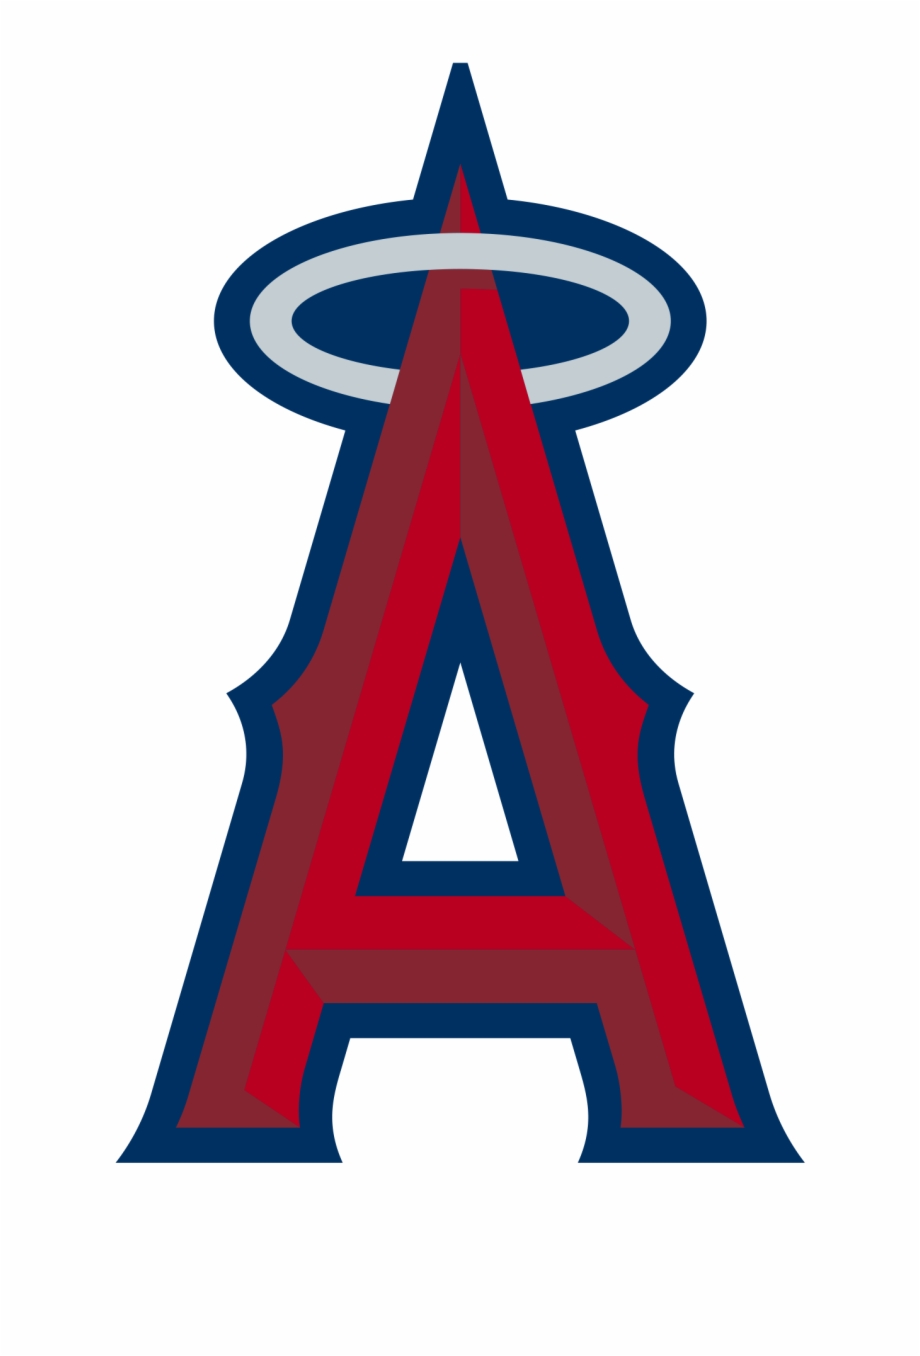 Cubs Red Sox Top Los Angeles Angels Logo